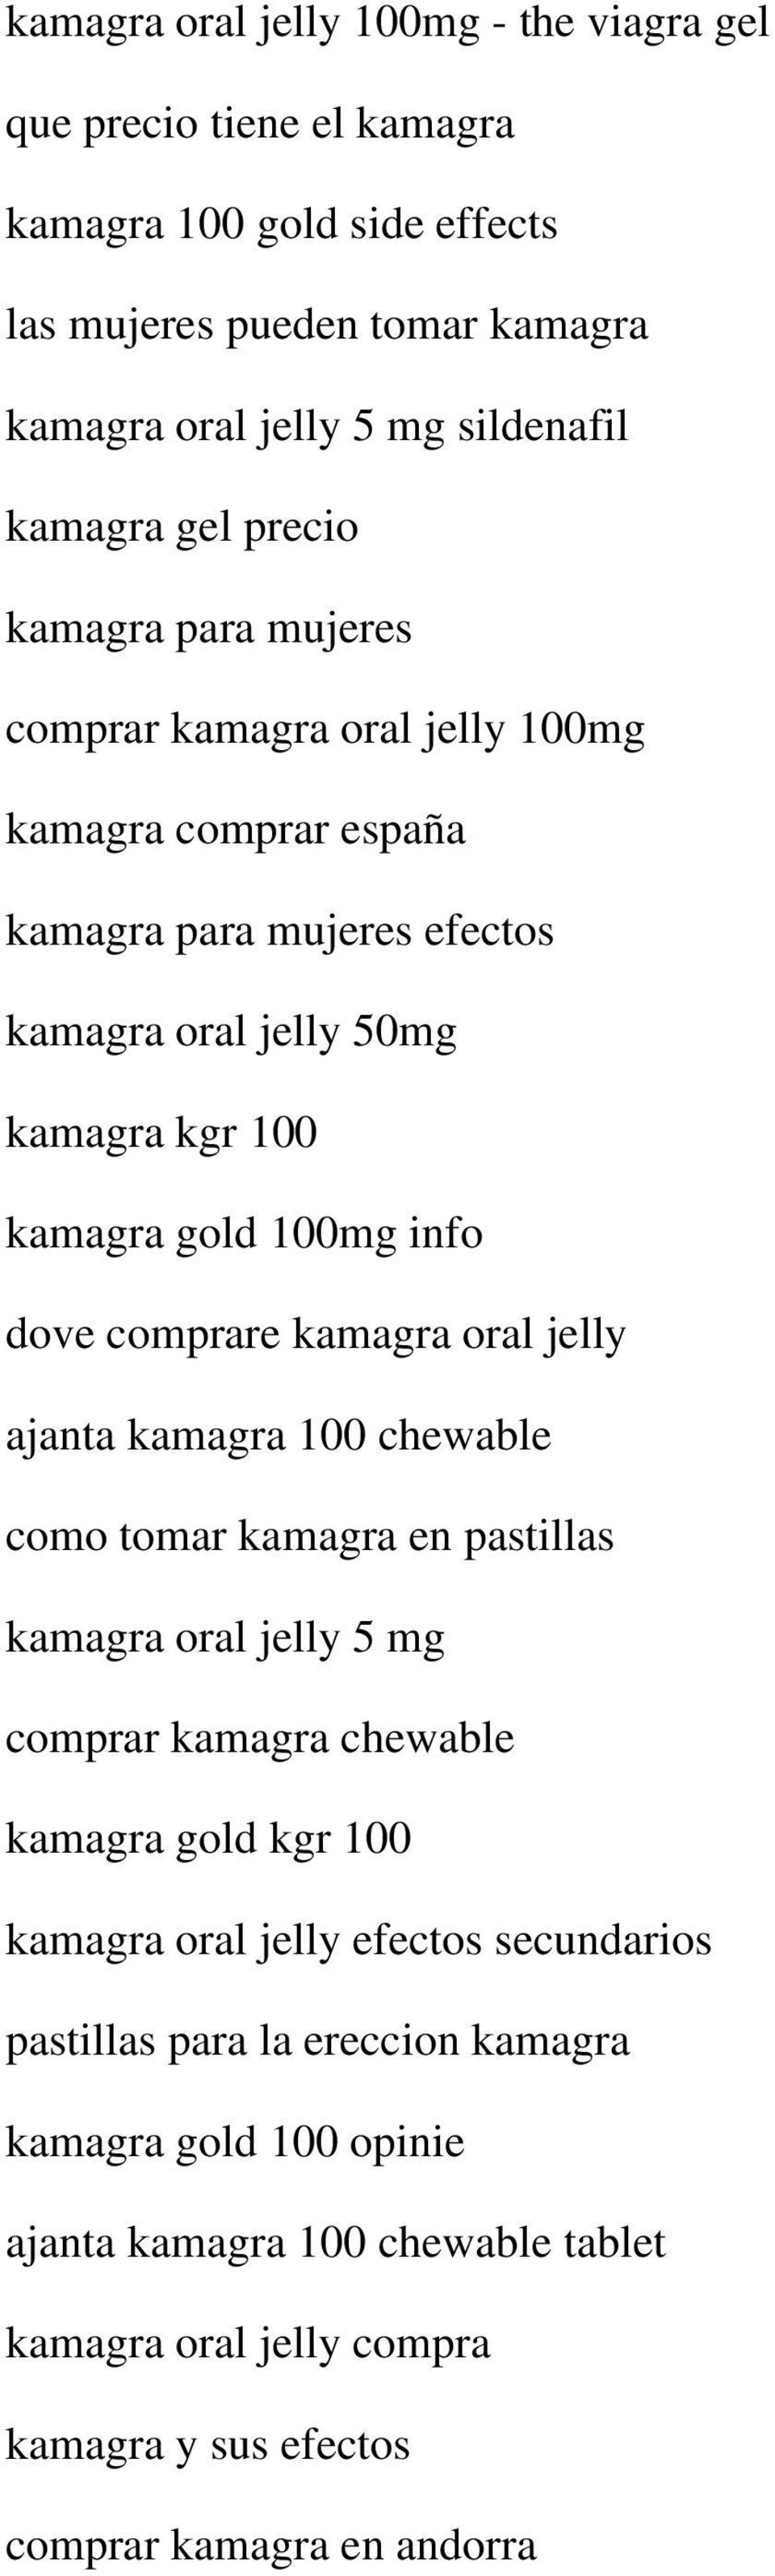 comprare kamagra oral jelly ajanta kamagra 100 chewable como tomar kamagra en pastillas kamagra oral jelly 5 mg comprar kamagra chewable kamagra gold kgr 100 kamagra oral jelly